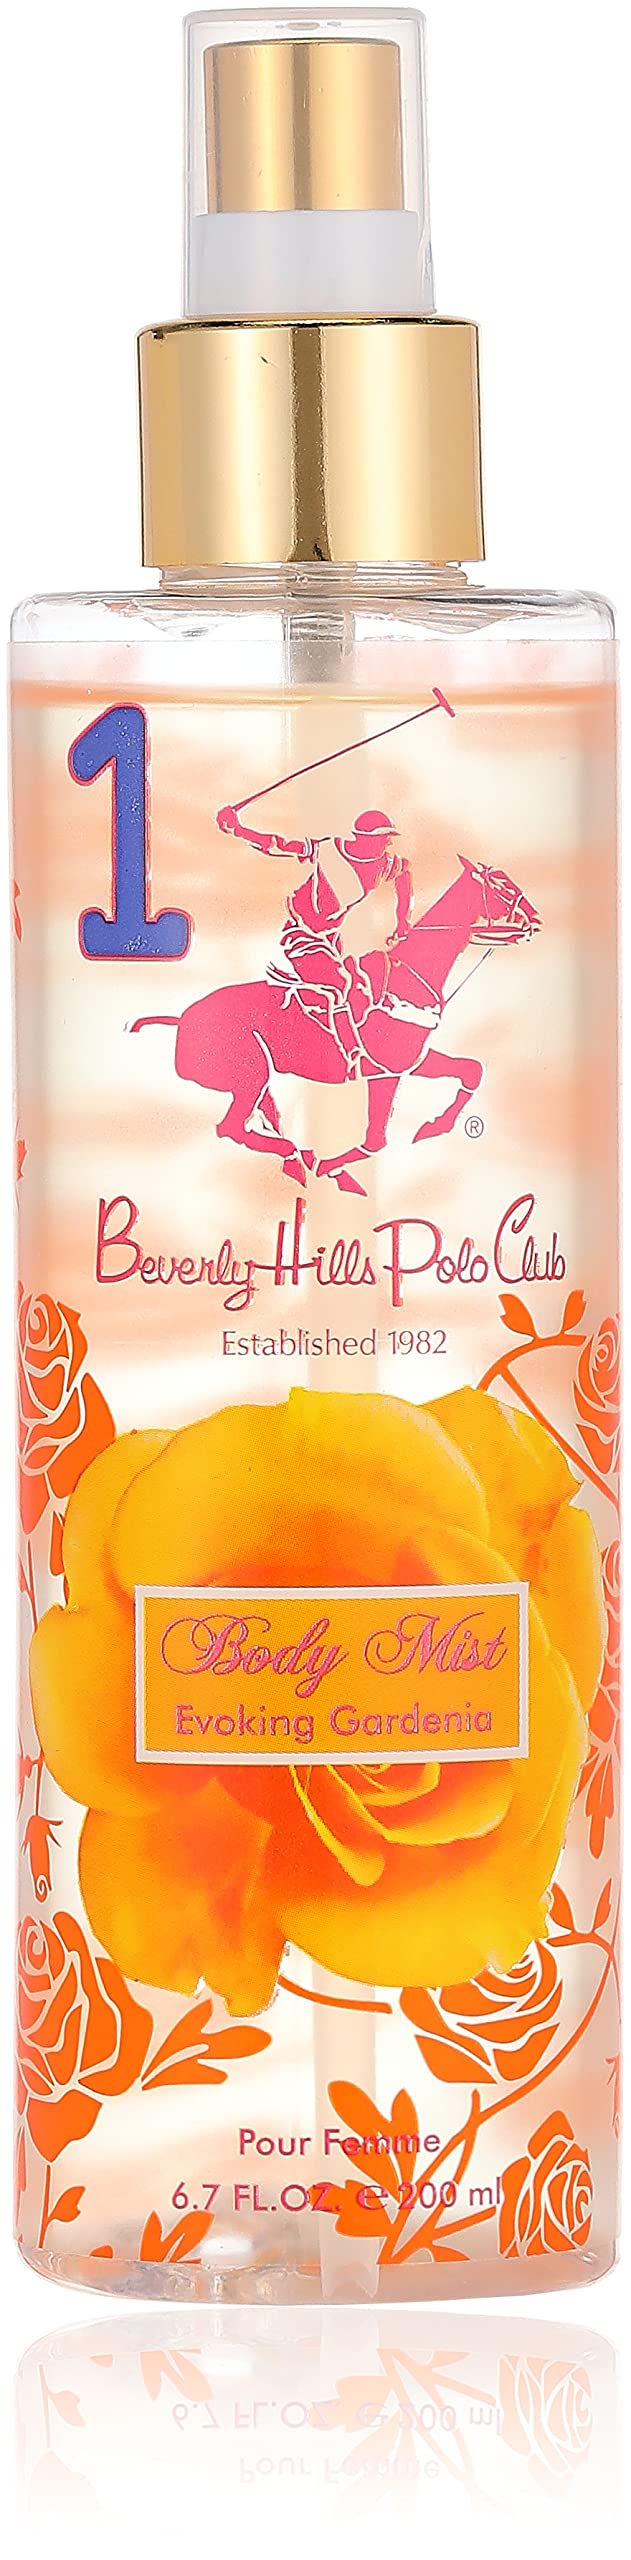 Beverly Hills Polo Club Premium Body Mist Evoking Gardenia No.1 (200Ml)